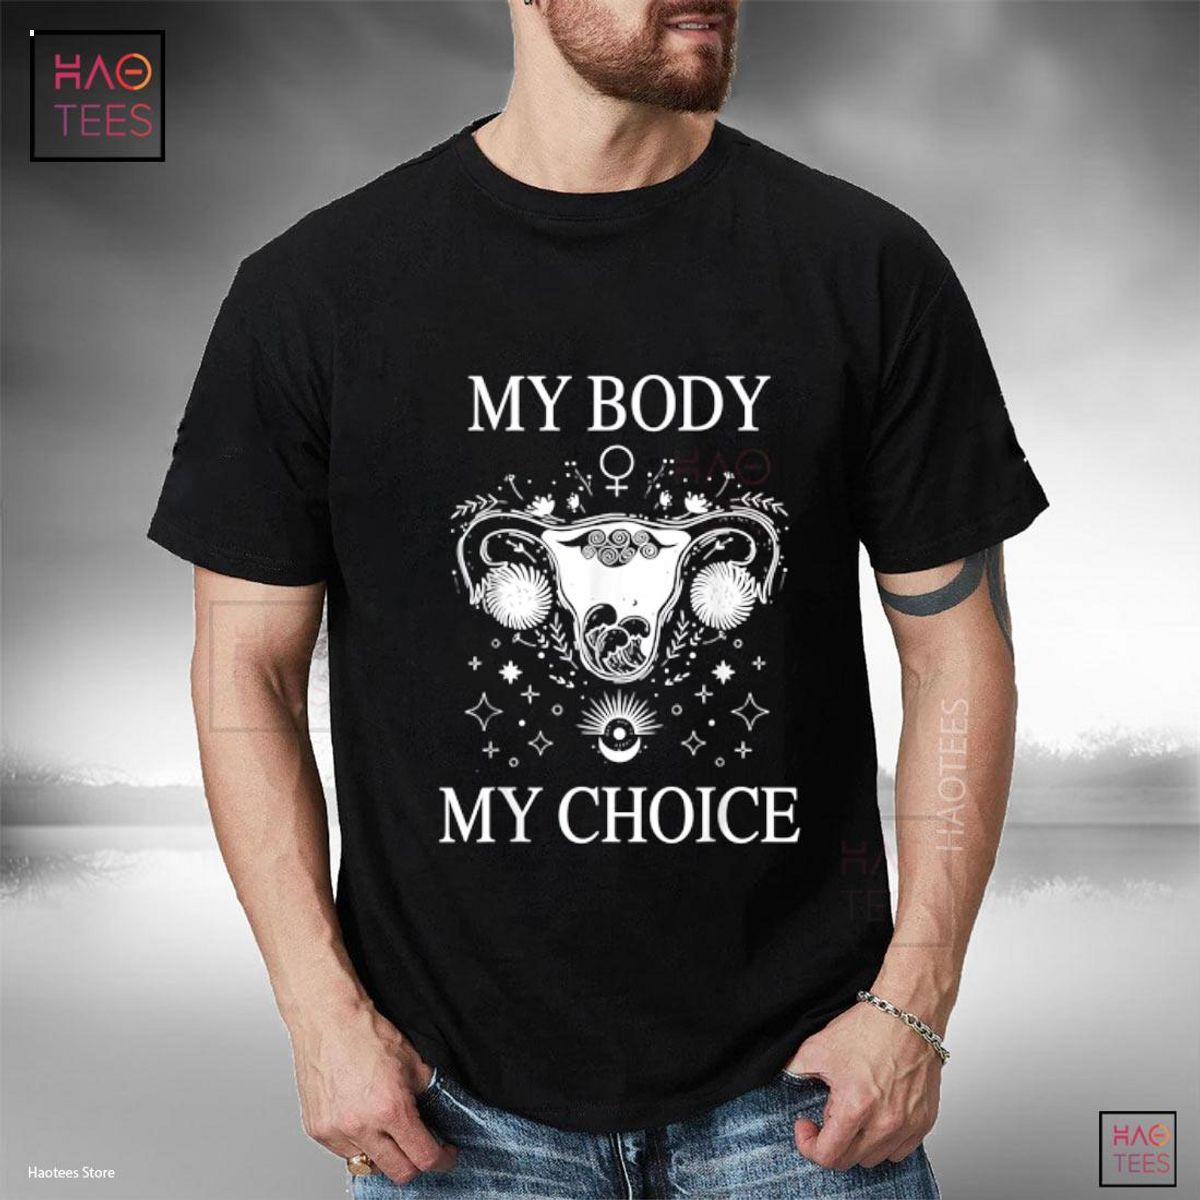 My Body My Choice Shirt Pro Choice Feminism Women's Rights Shirt